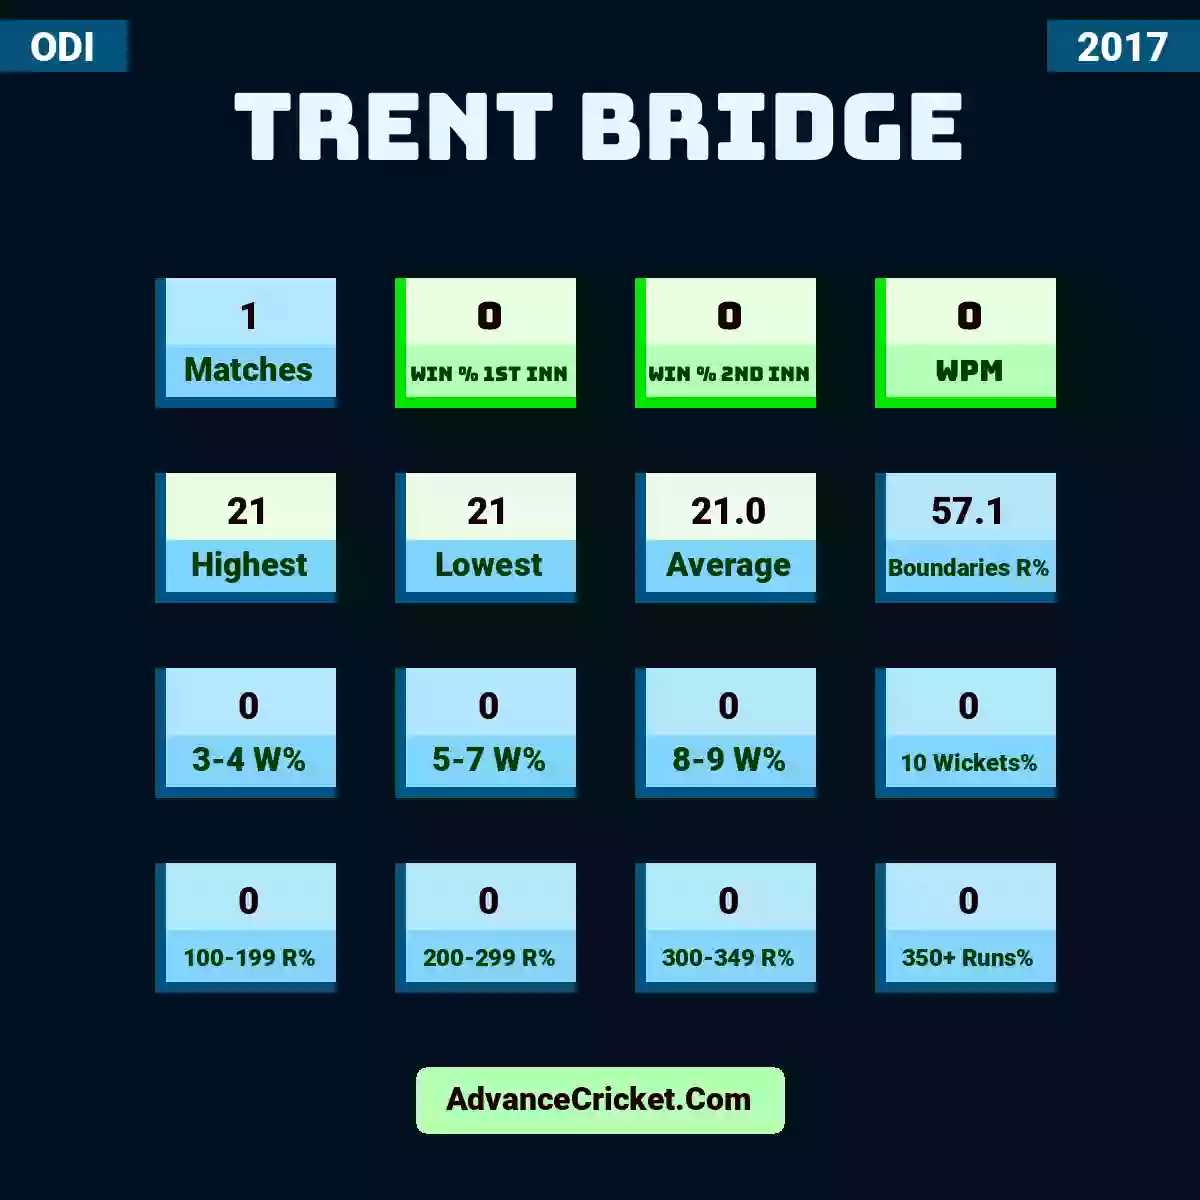 Image showing Trent Bridge with Matches: 1, Win % 1st Inn: 0, Win % 2nd Inn: 0, WPM: 0, Highest: 21, Lowest: 21, Average: 21.0, Boundaries R%: 57.1, 3-4 W%: 0, 5-7 W%: 0, 8-9 W%: 0, 10 Wickets%: 0, 100-199 R%: 0, 200-299 R%: 0, 300-349 R%: 0, 350+ Runs%: 0.